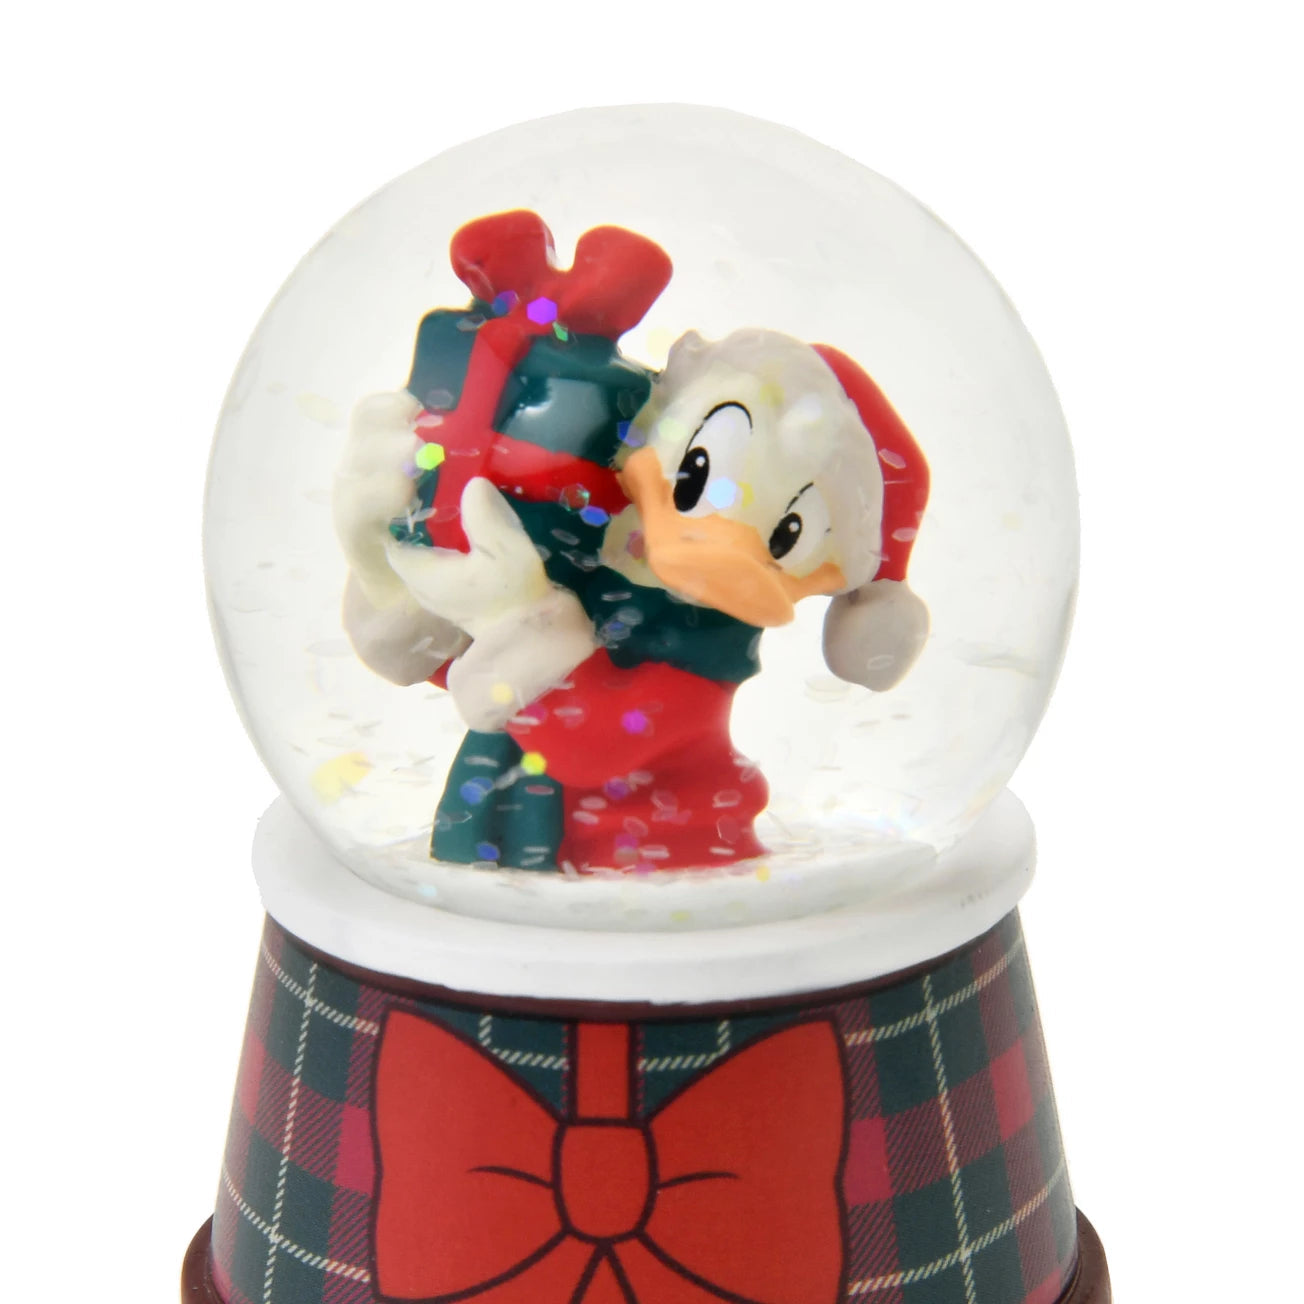 Disney Christmas Mini Crystal Ball [In stock]